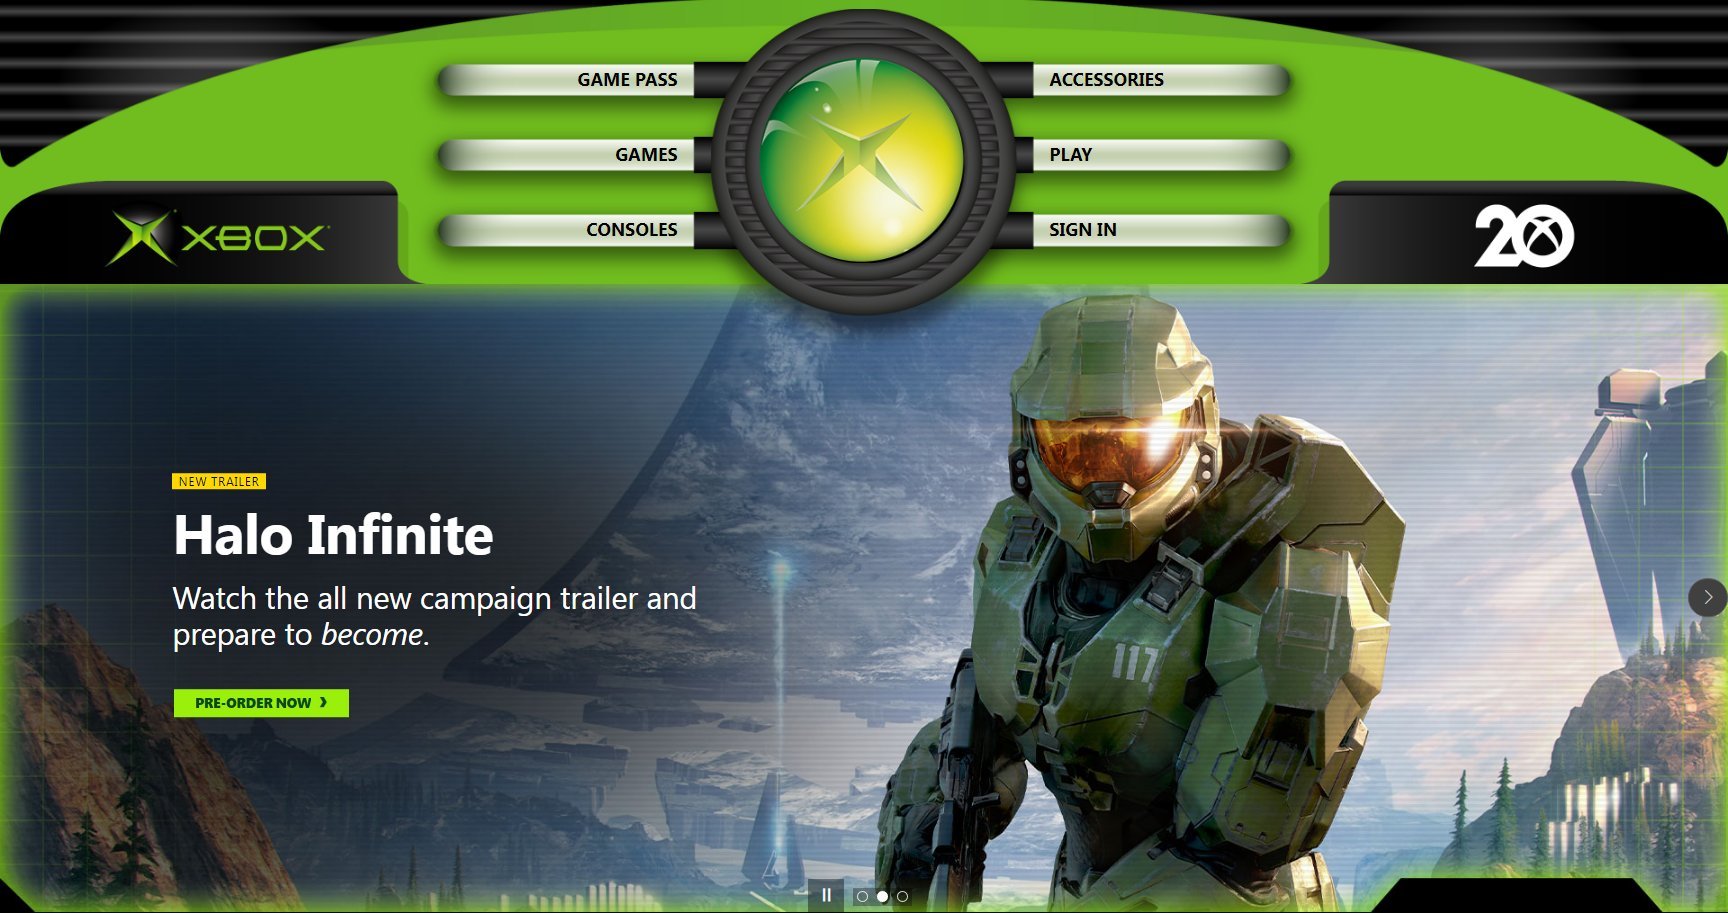 arrebatar yo cooperar Xbox's website has been given a new look inspired by the original Xbox | VGC